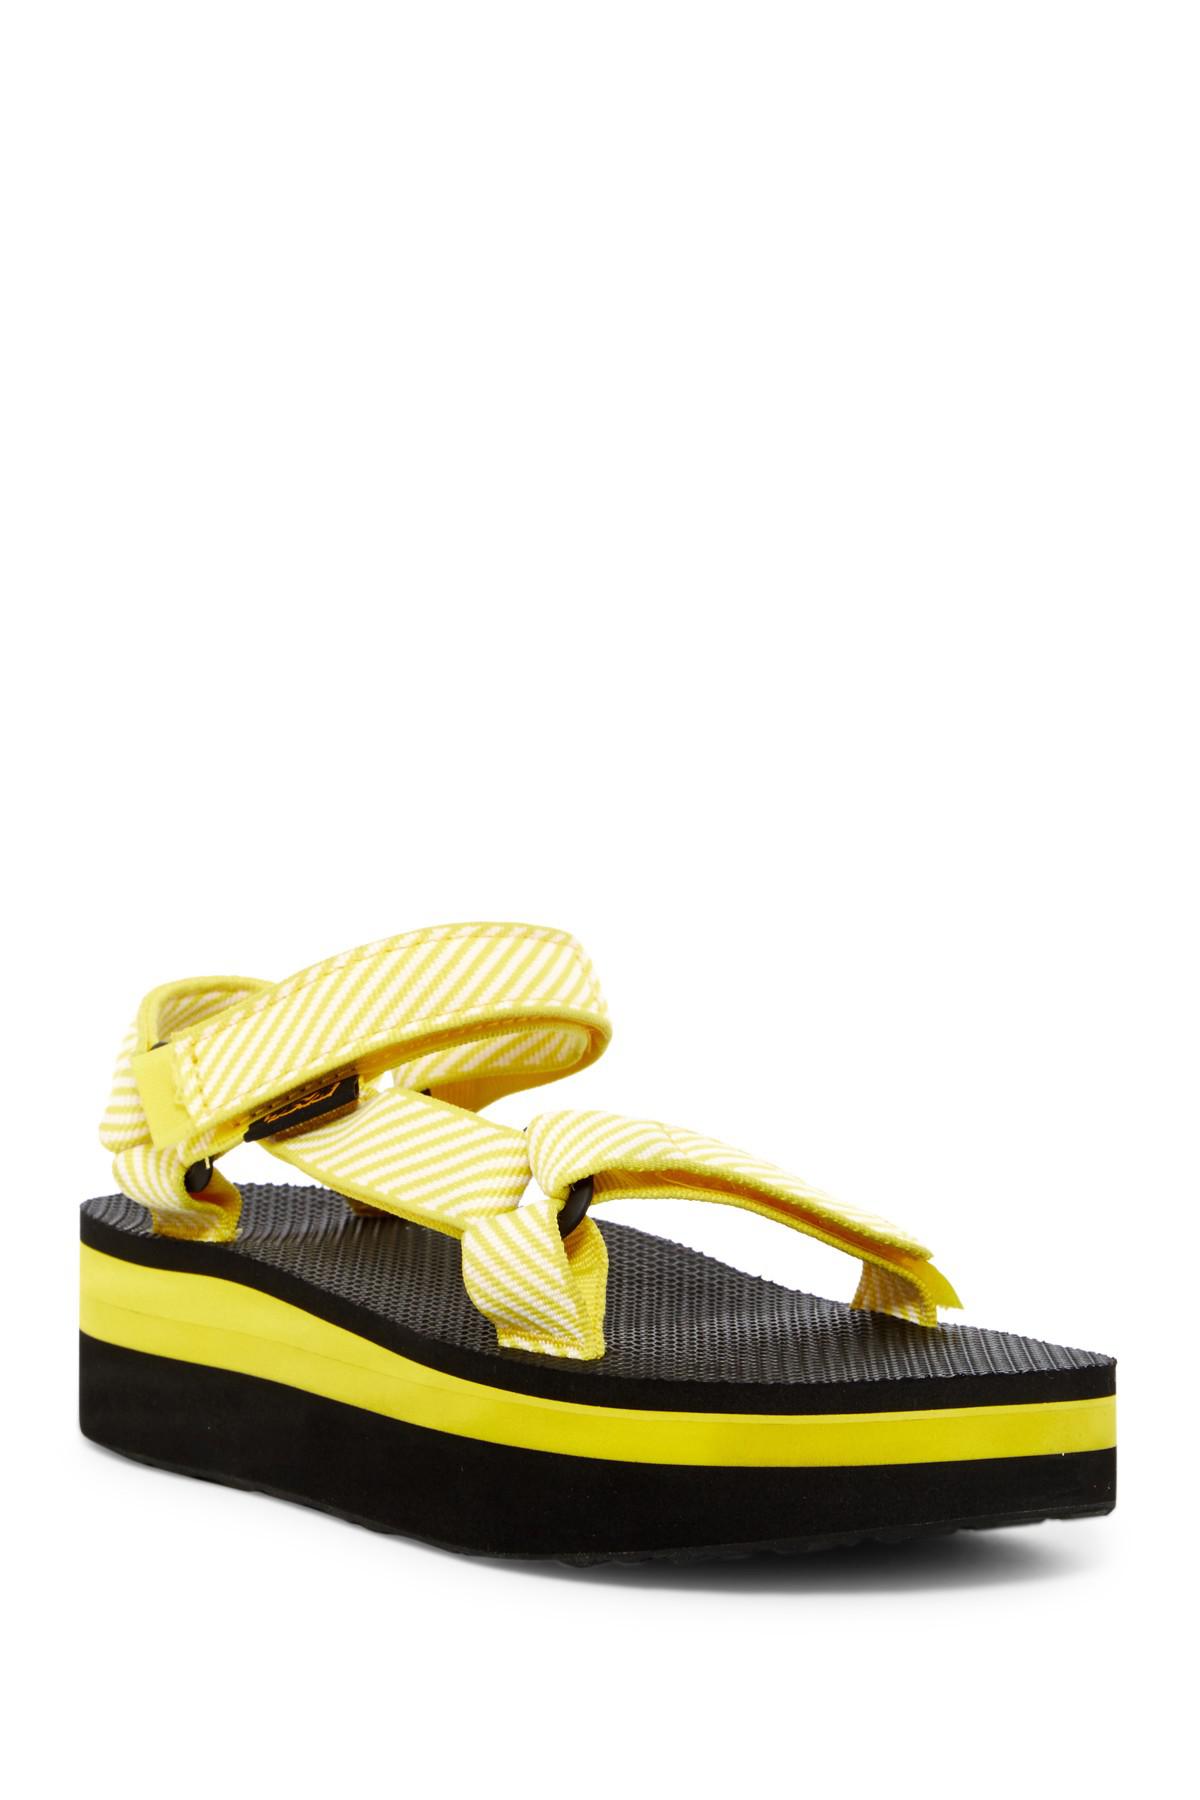 Teva Rubber Flatform Universal Sandal in Yellow - Lyst